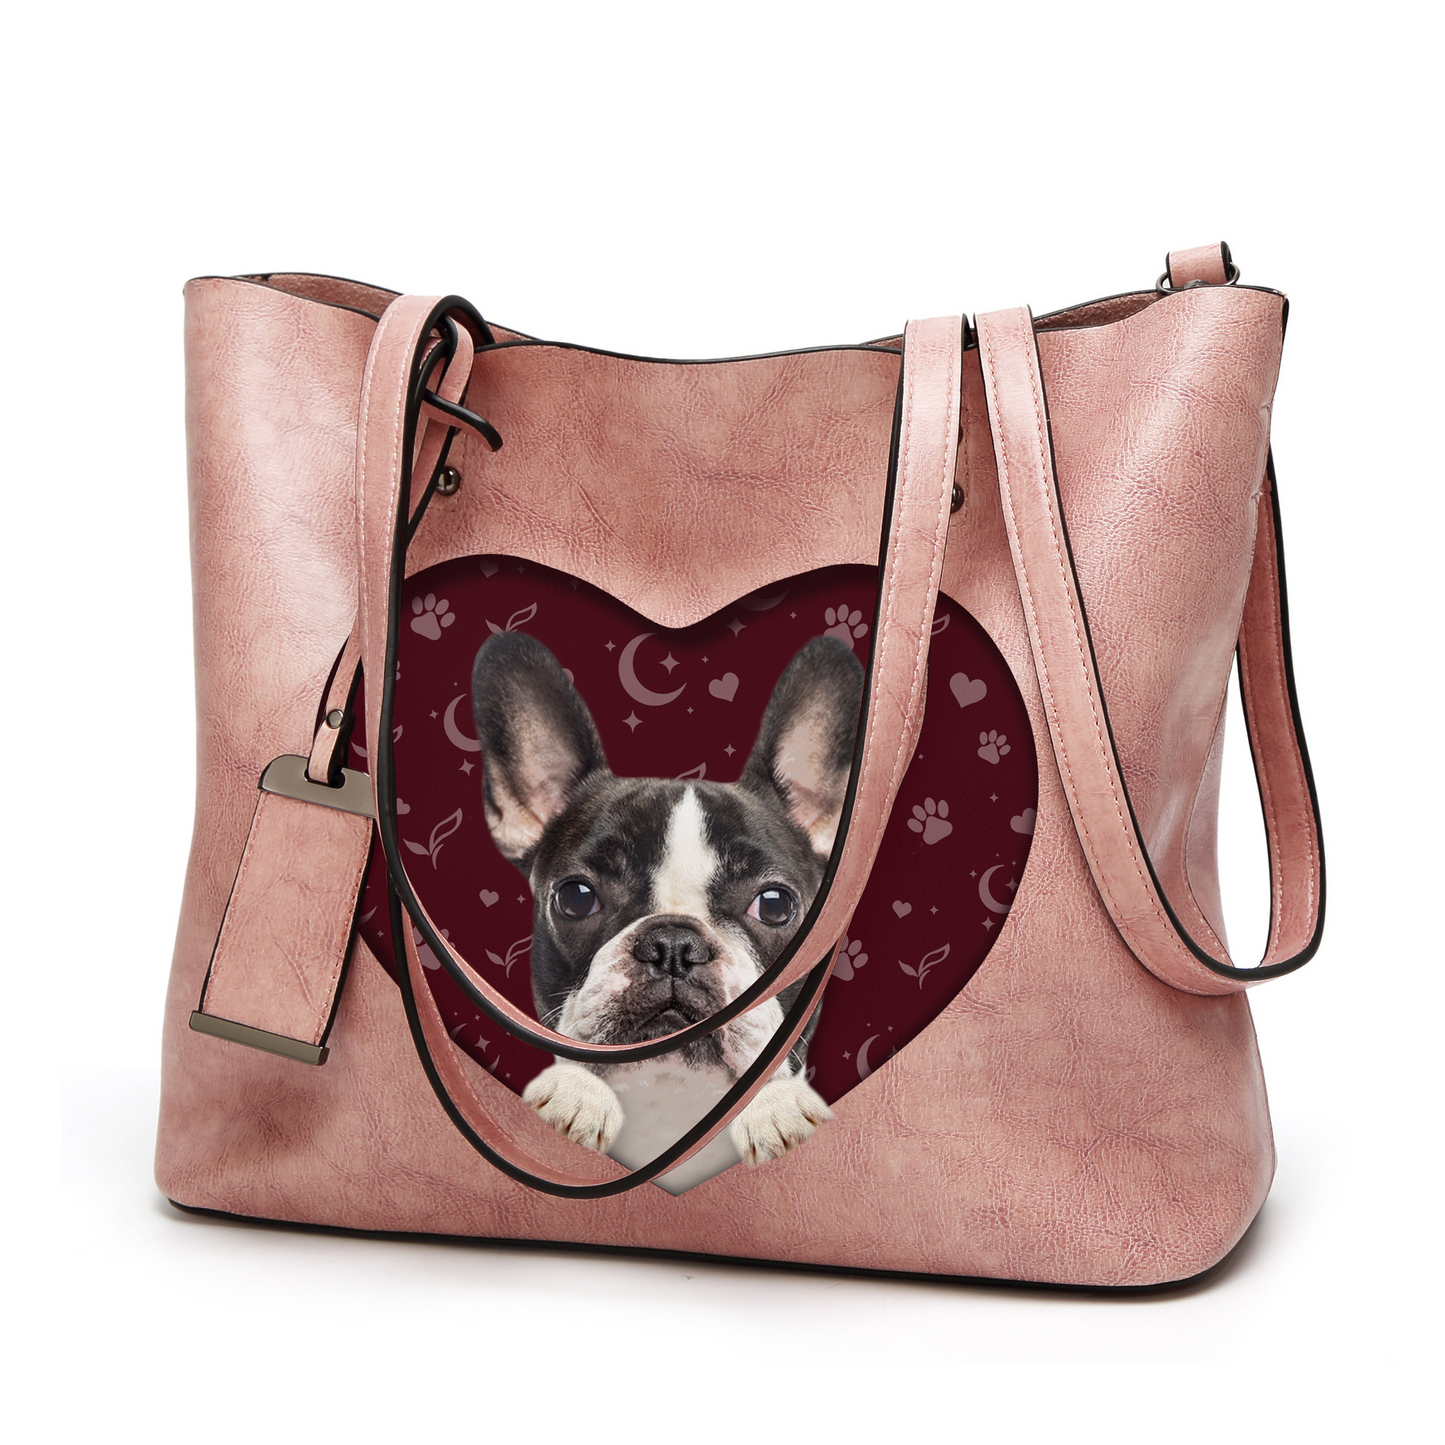 I Know I'm Cute - French Bulldog Glamour Handbag V3 - 7